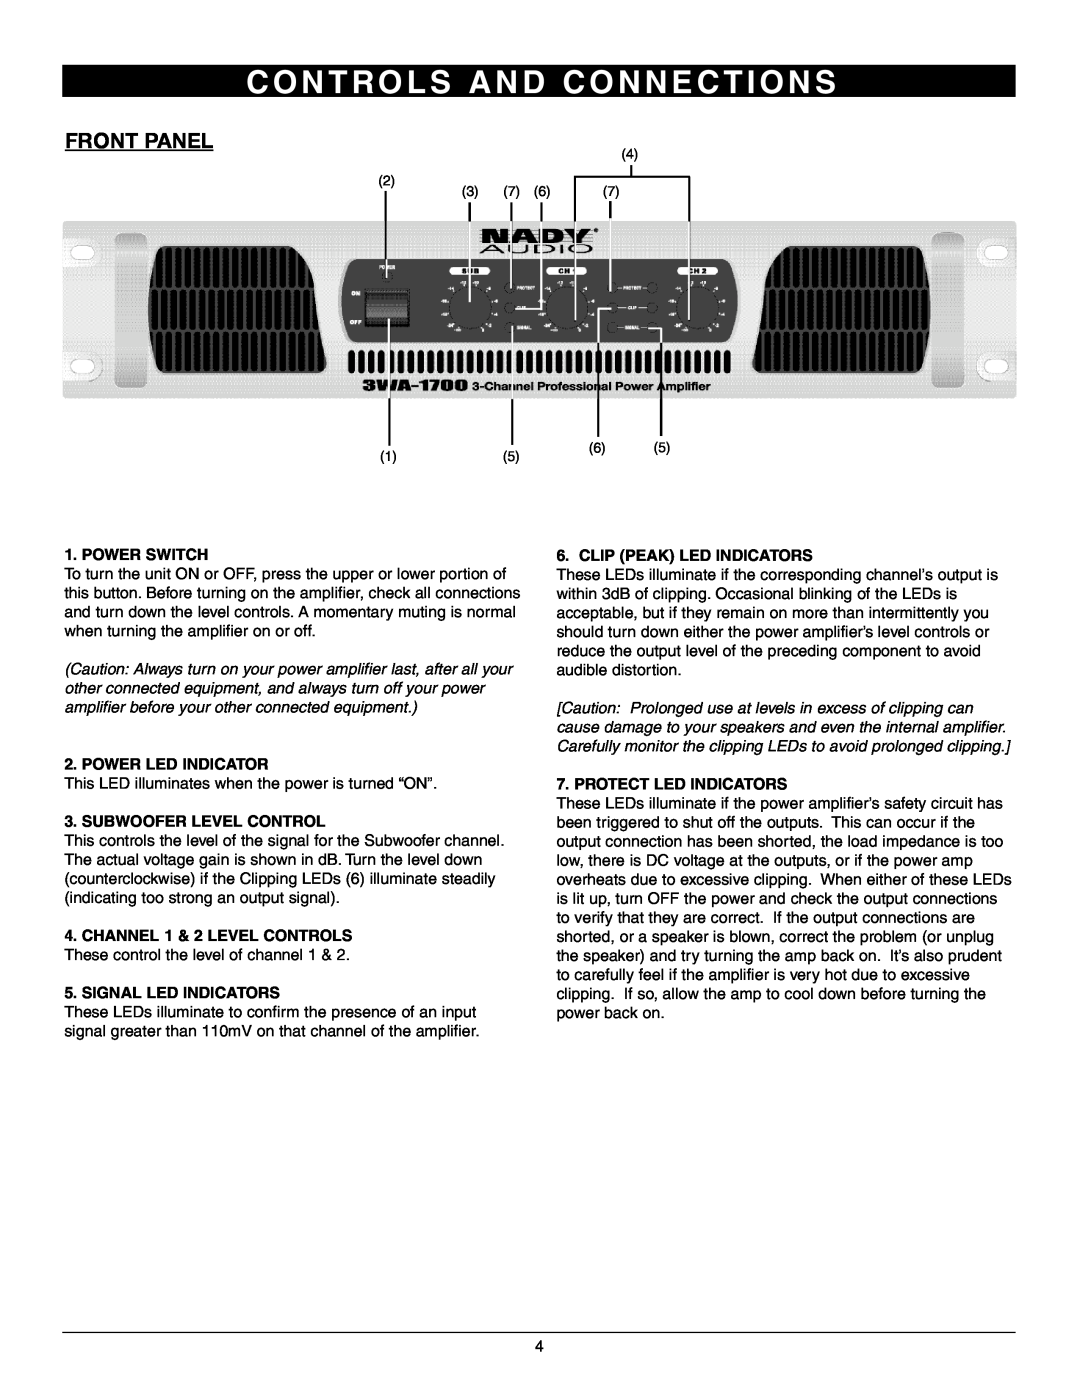 Nady Systems 3WA-1700 C O N T R O L S A N D C O N N E C T I O N S, Front Panel, Power Switch, Power Led Indicator 